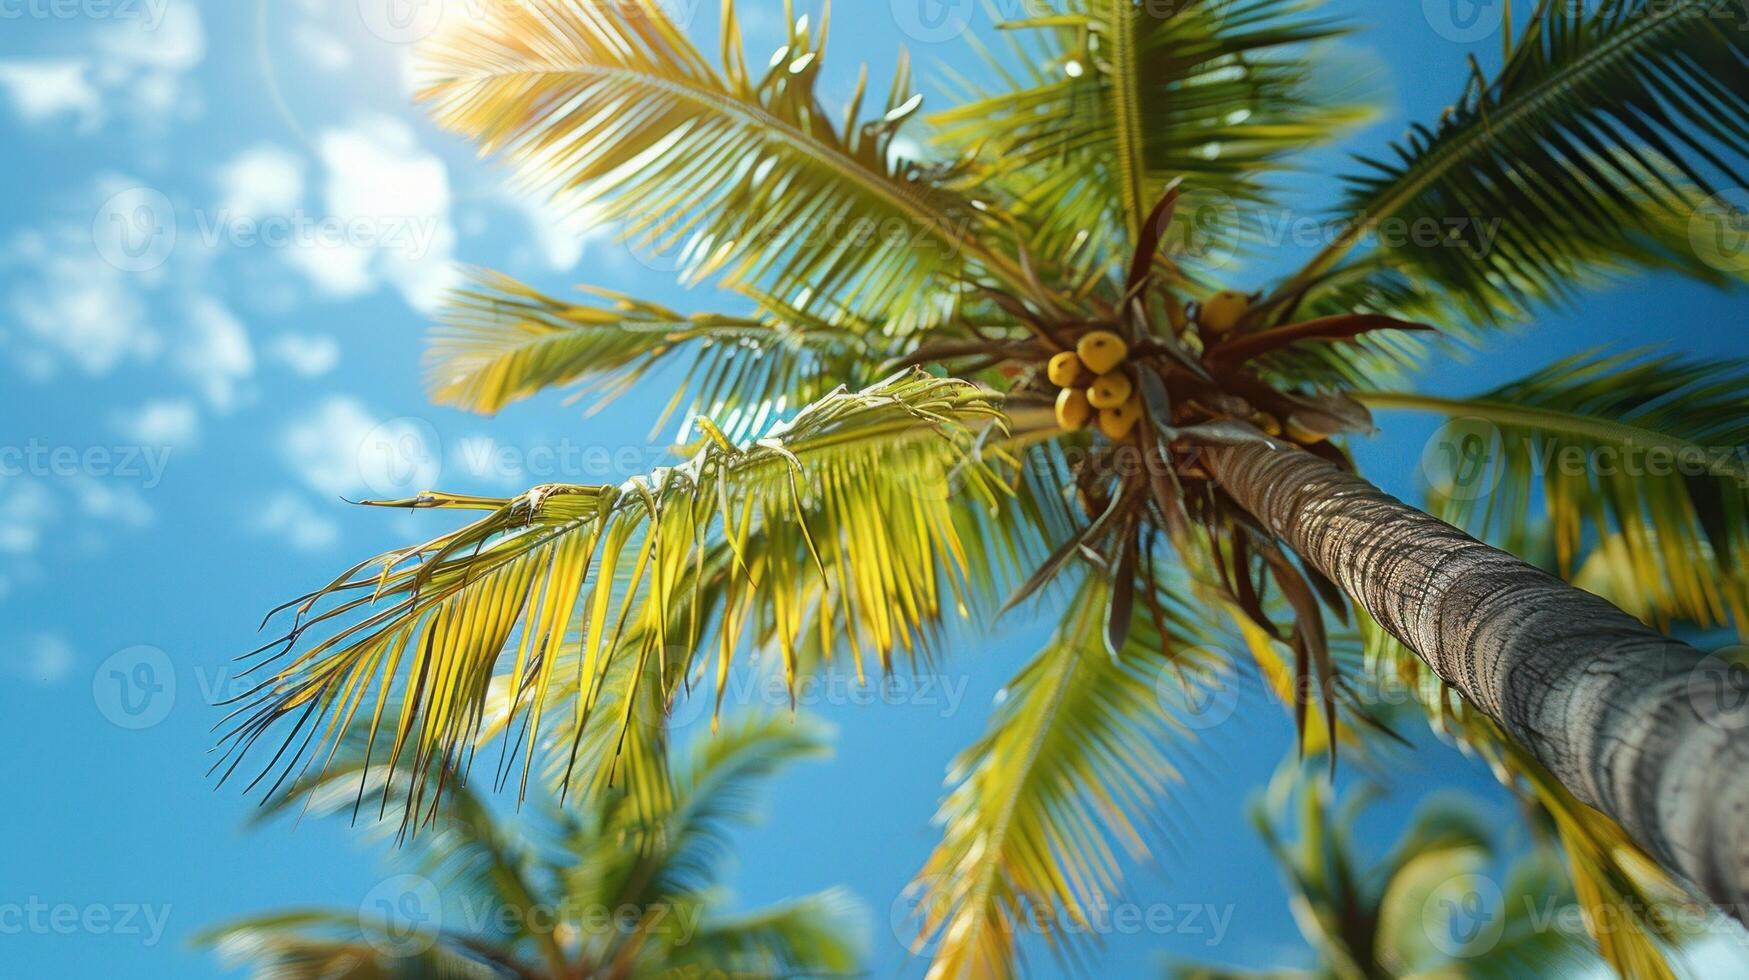 Sun rays shining through green palm leaves against a blue sky photo